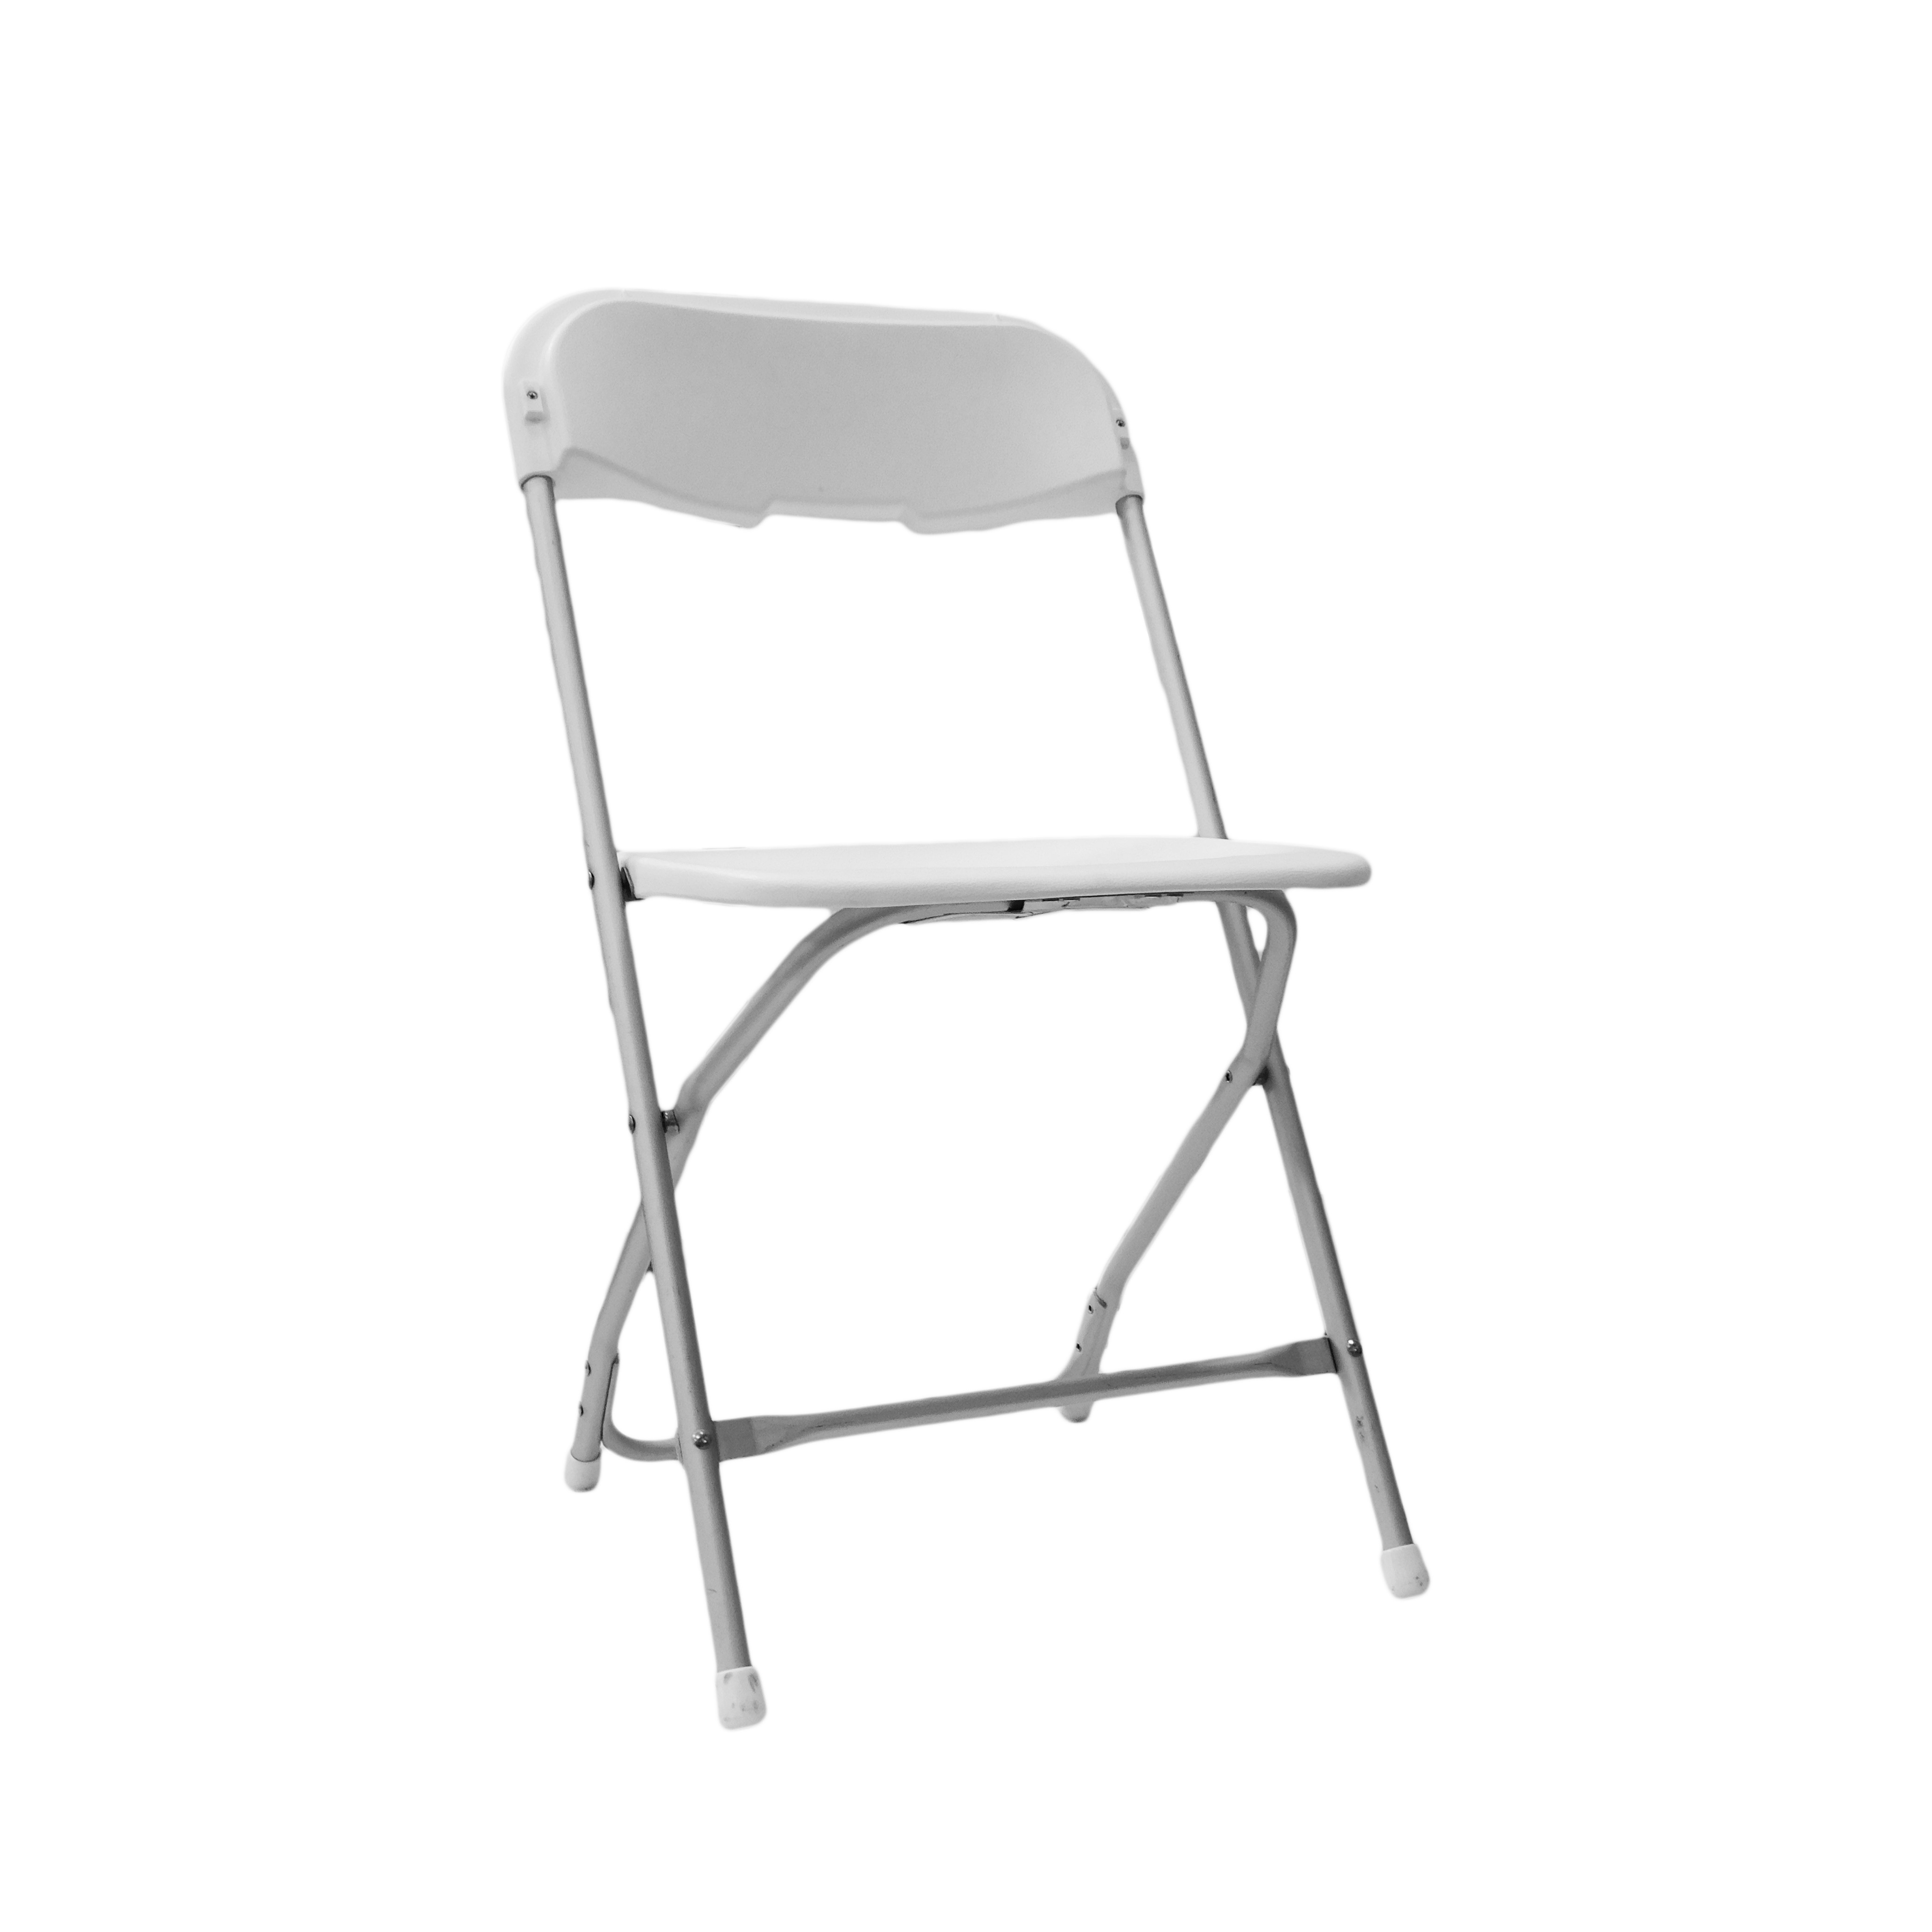 Basic Folding Chairs Lasting Impressions Event Rentals